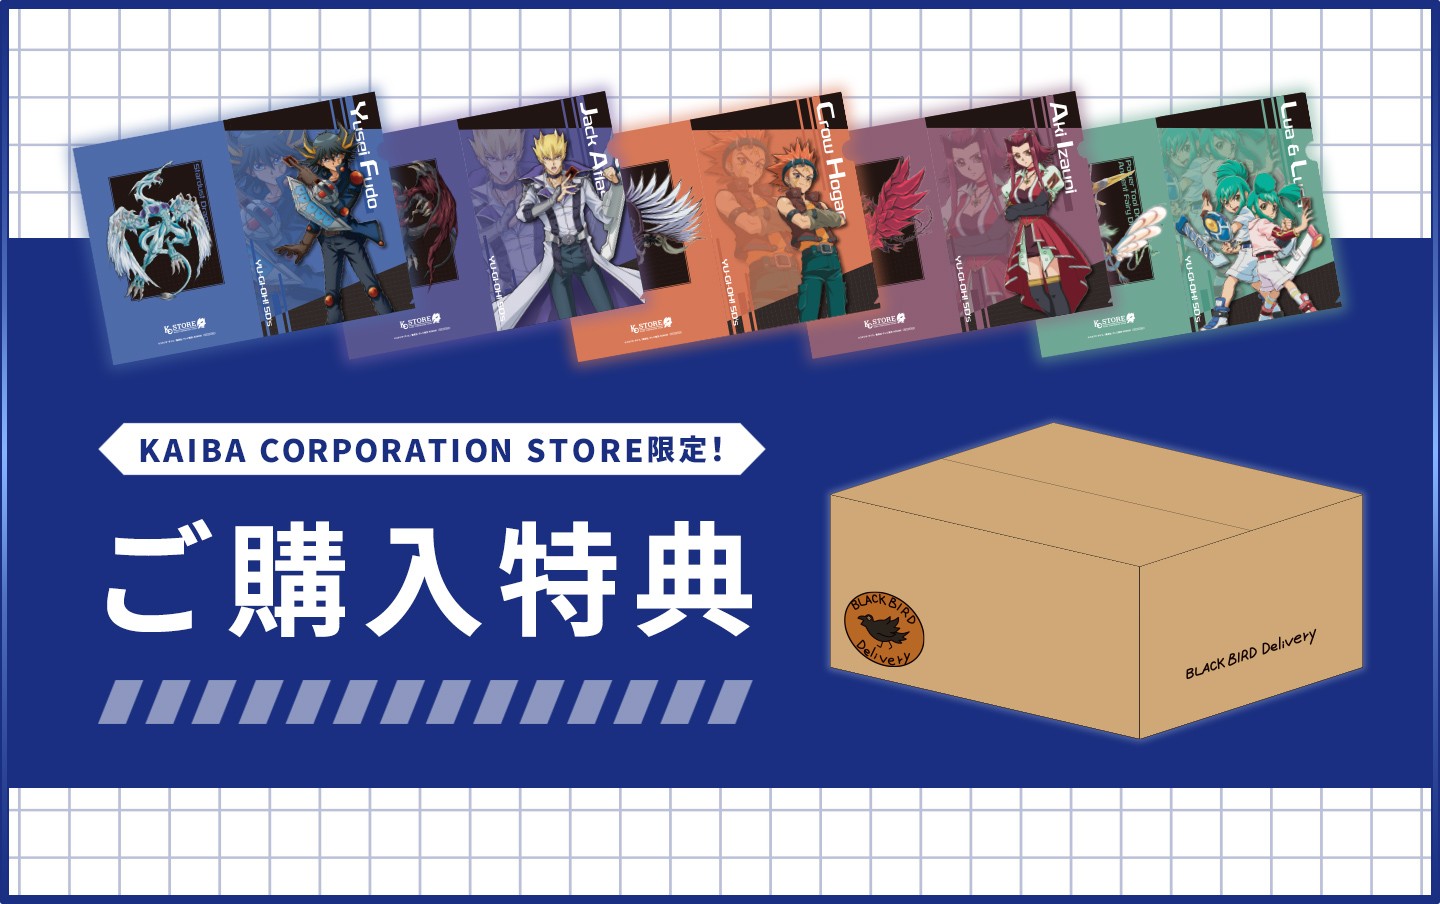 KAIBA CORPORATION STORE 特製ボックスで商品が届く！